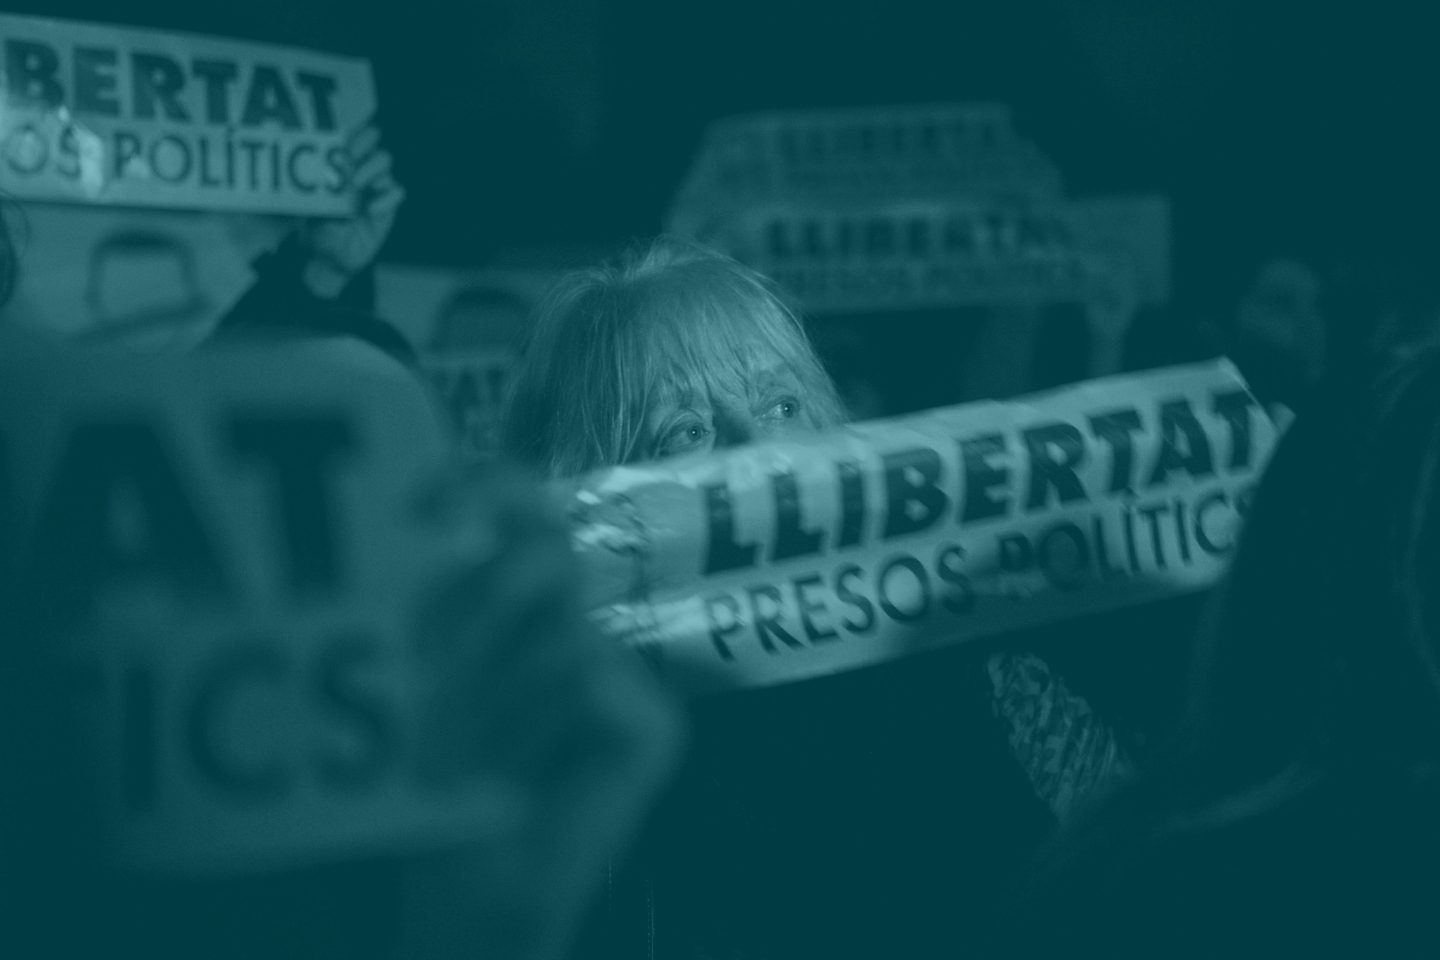 Una mujer muestra una pancarta con la palabra 'Libertad'.